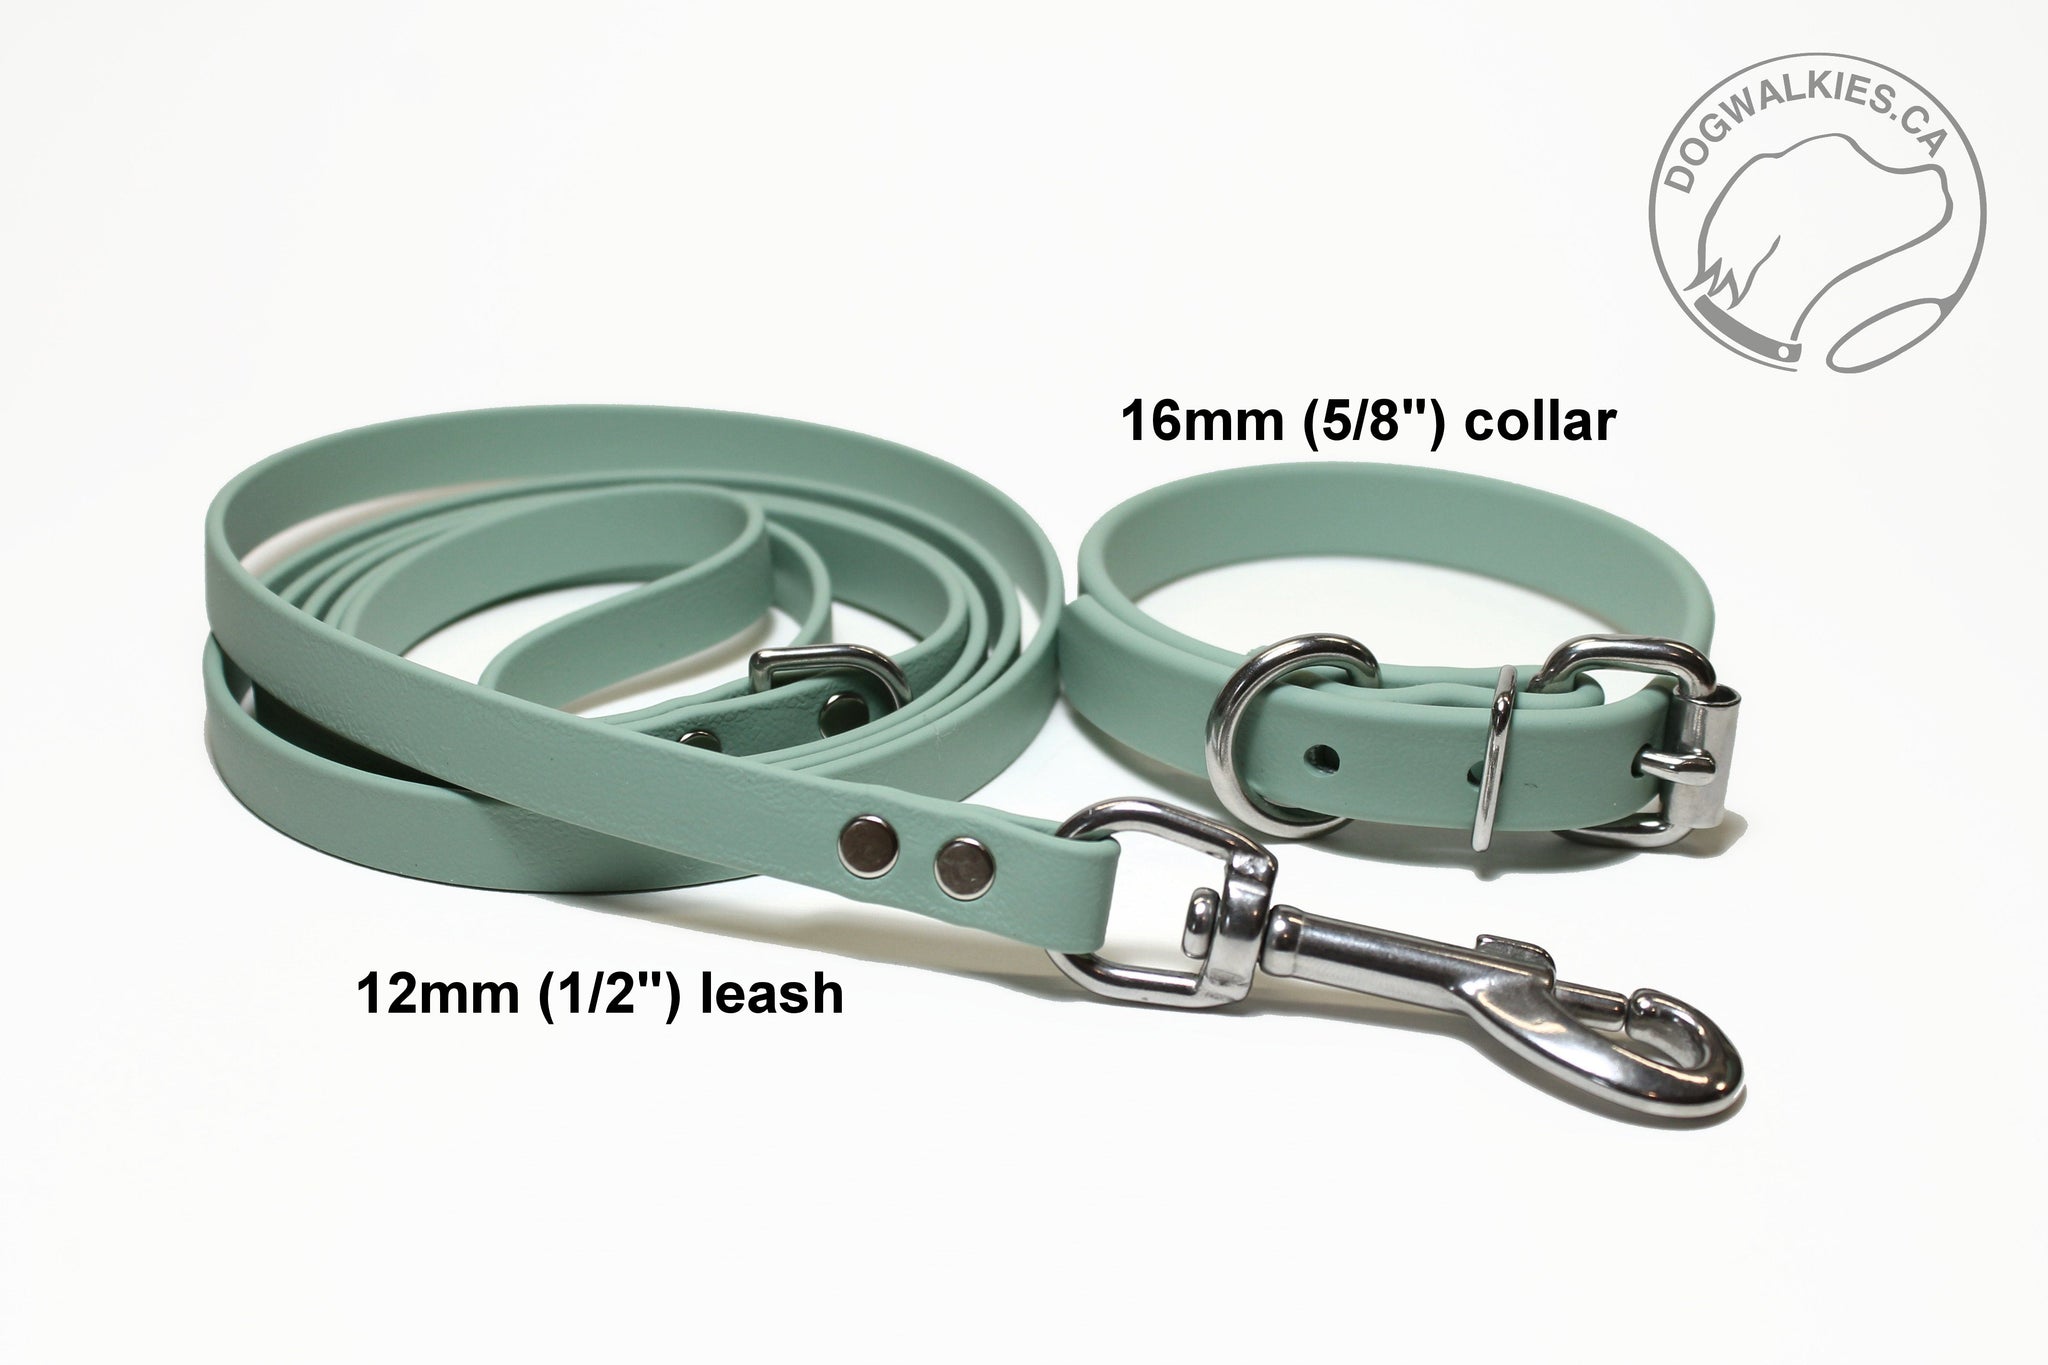 Sage Green Biothane Dog Collar - 5/8"(16mm) wide